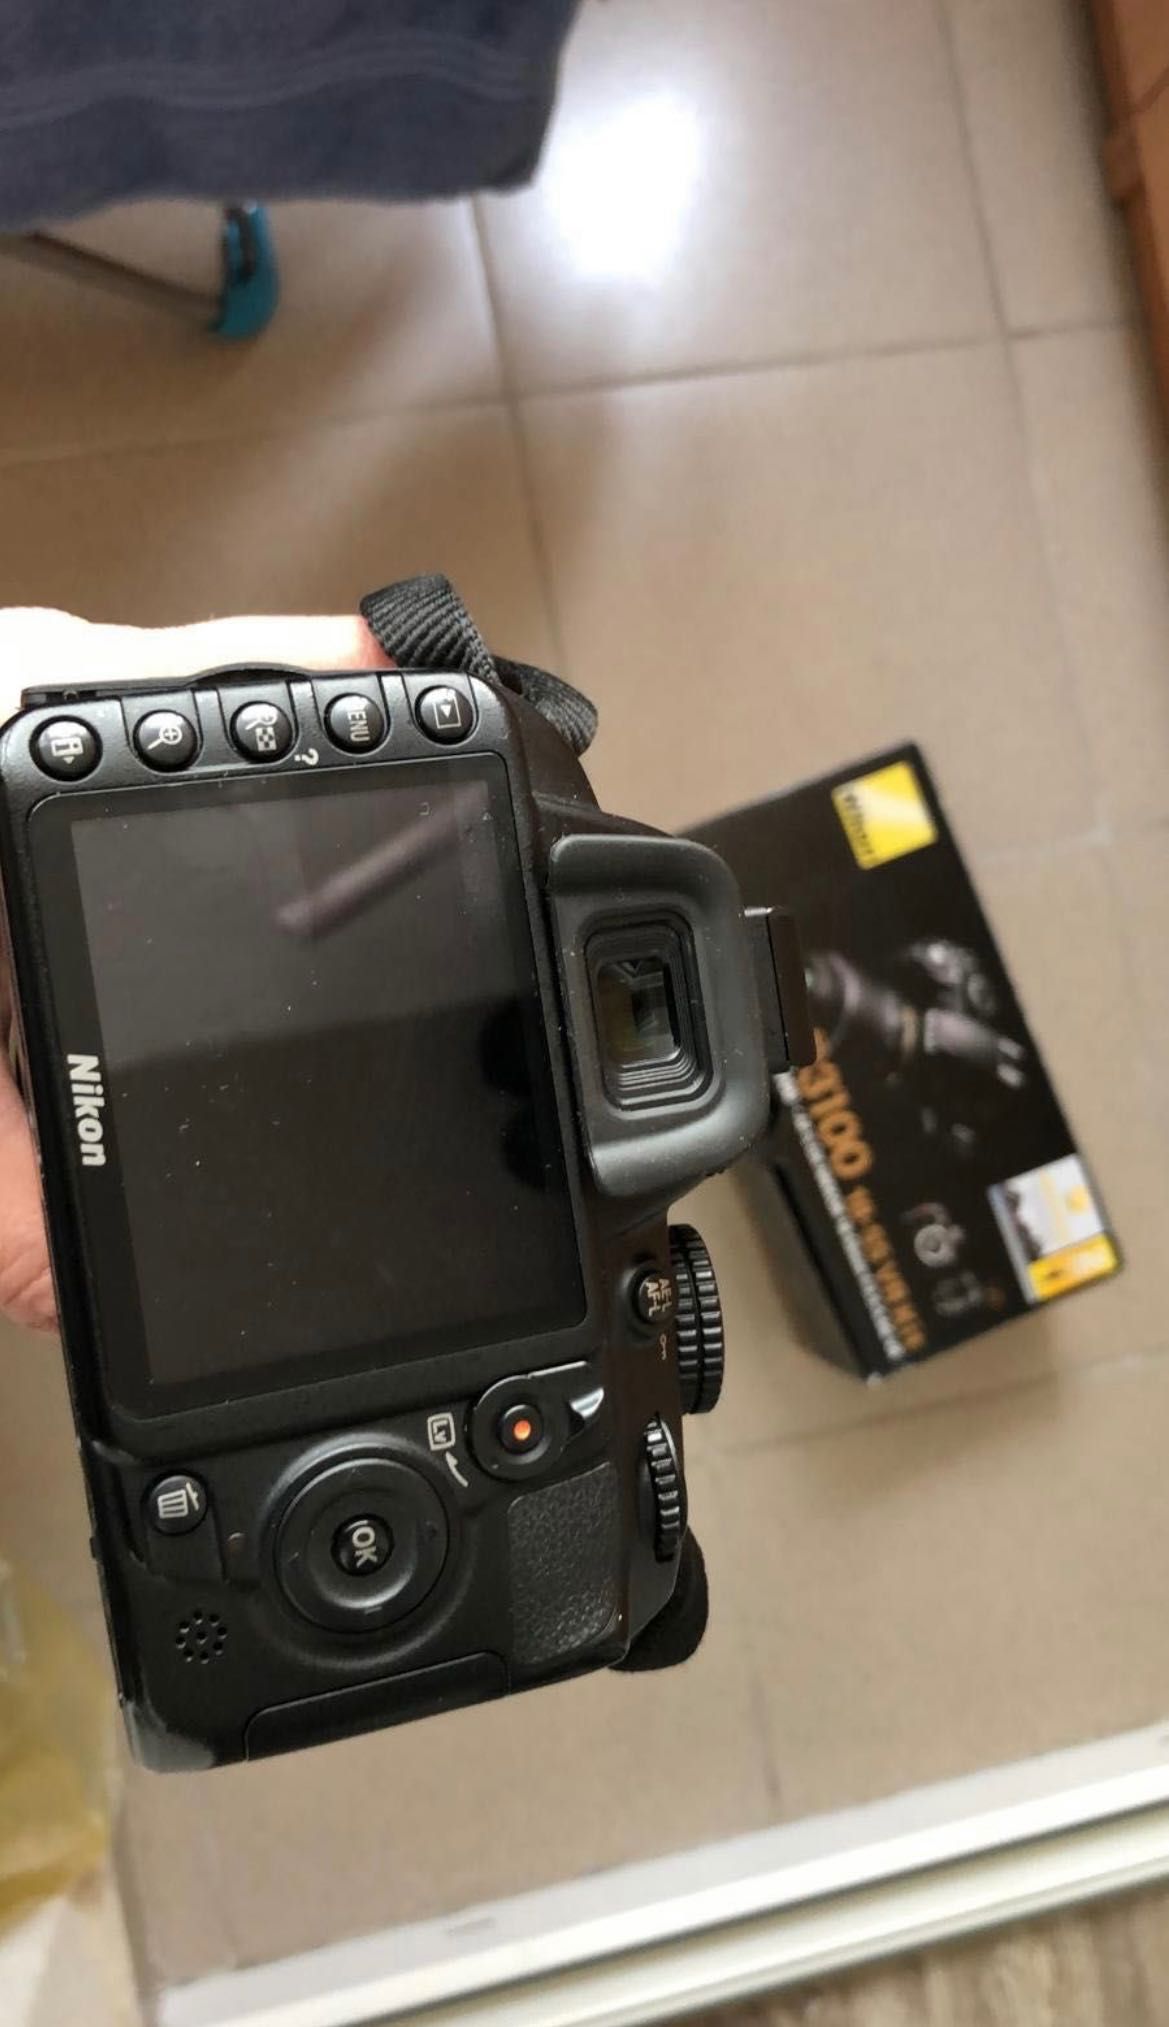 Aparat foto DSLR Nikon D3100, 14.2MP + Obiectiv 18-55mm VR